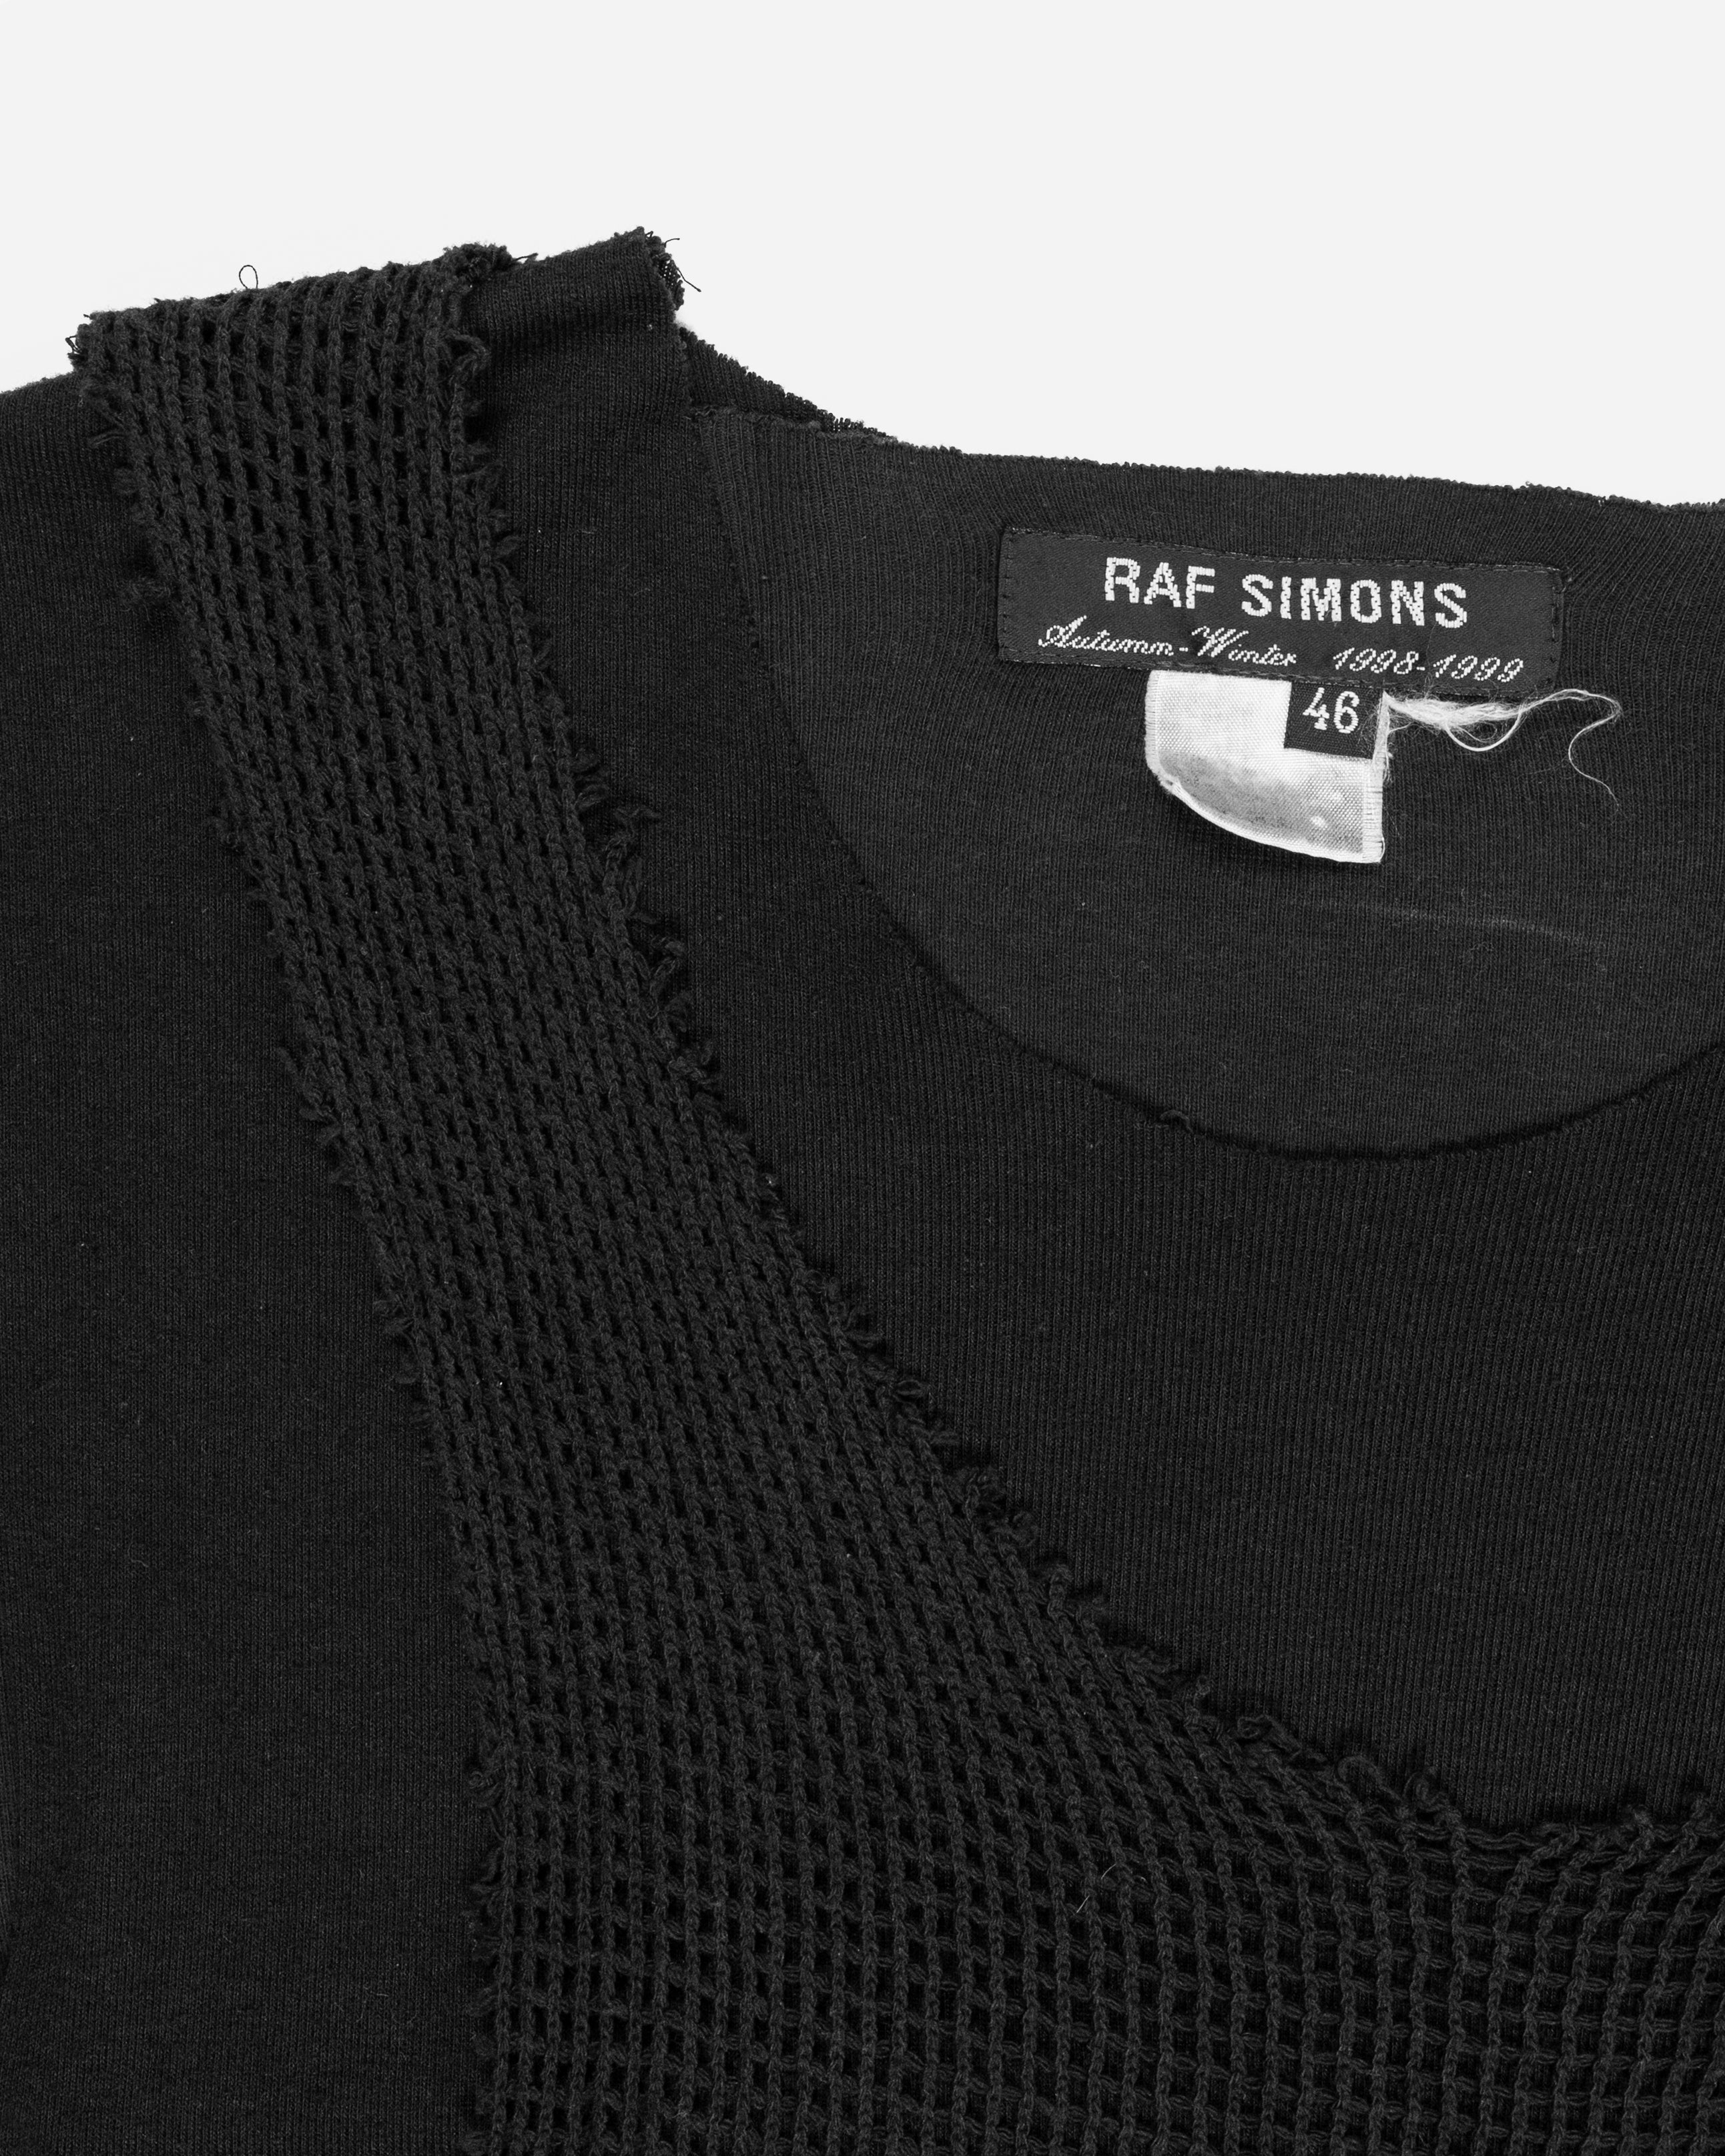 Raf Simons Triple Layered Long-Sleeve Top - AW98 “Radioactivity